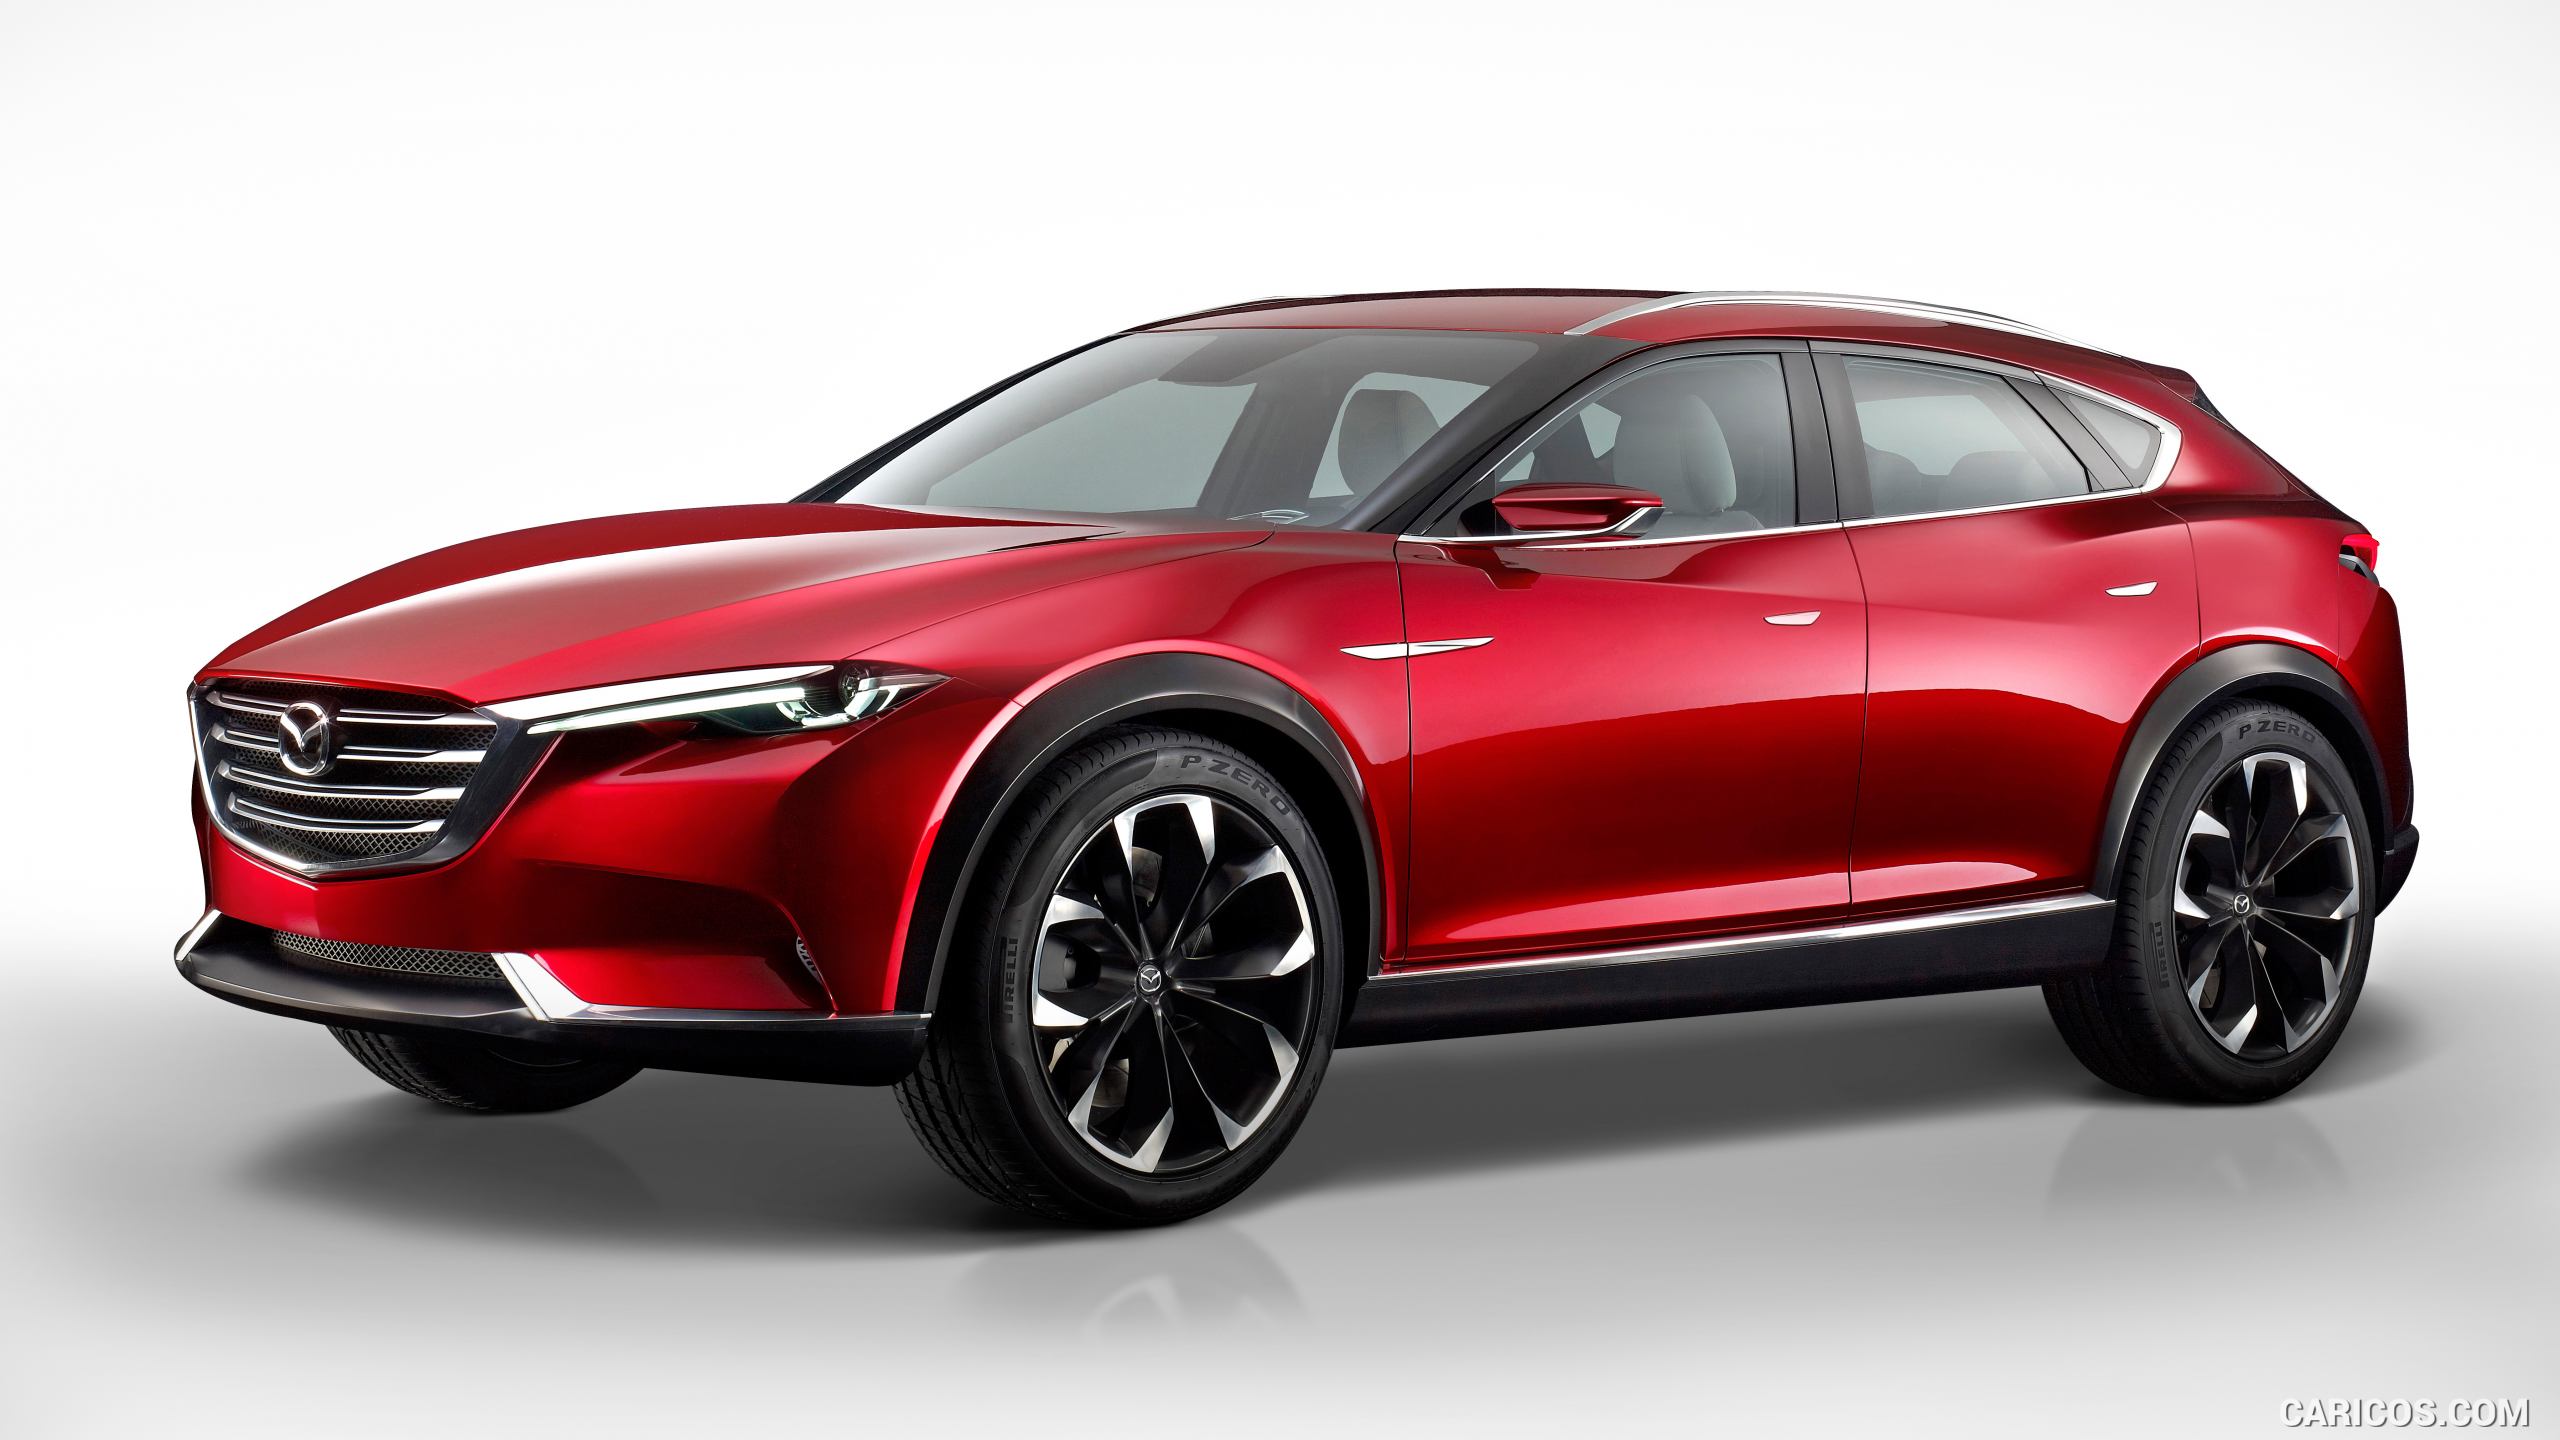 2015 Mazda Koeru Crossover Concept - Front, #1 of 17